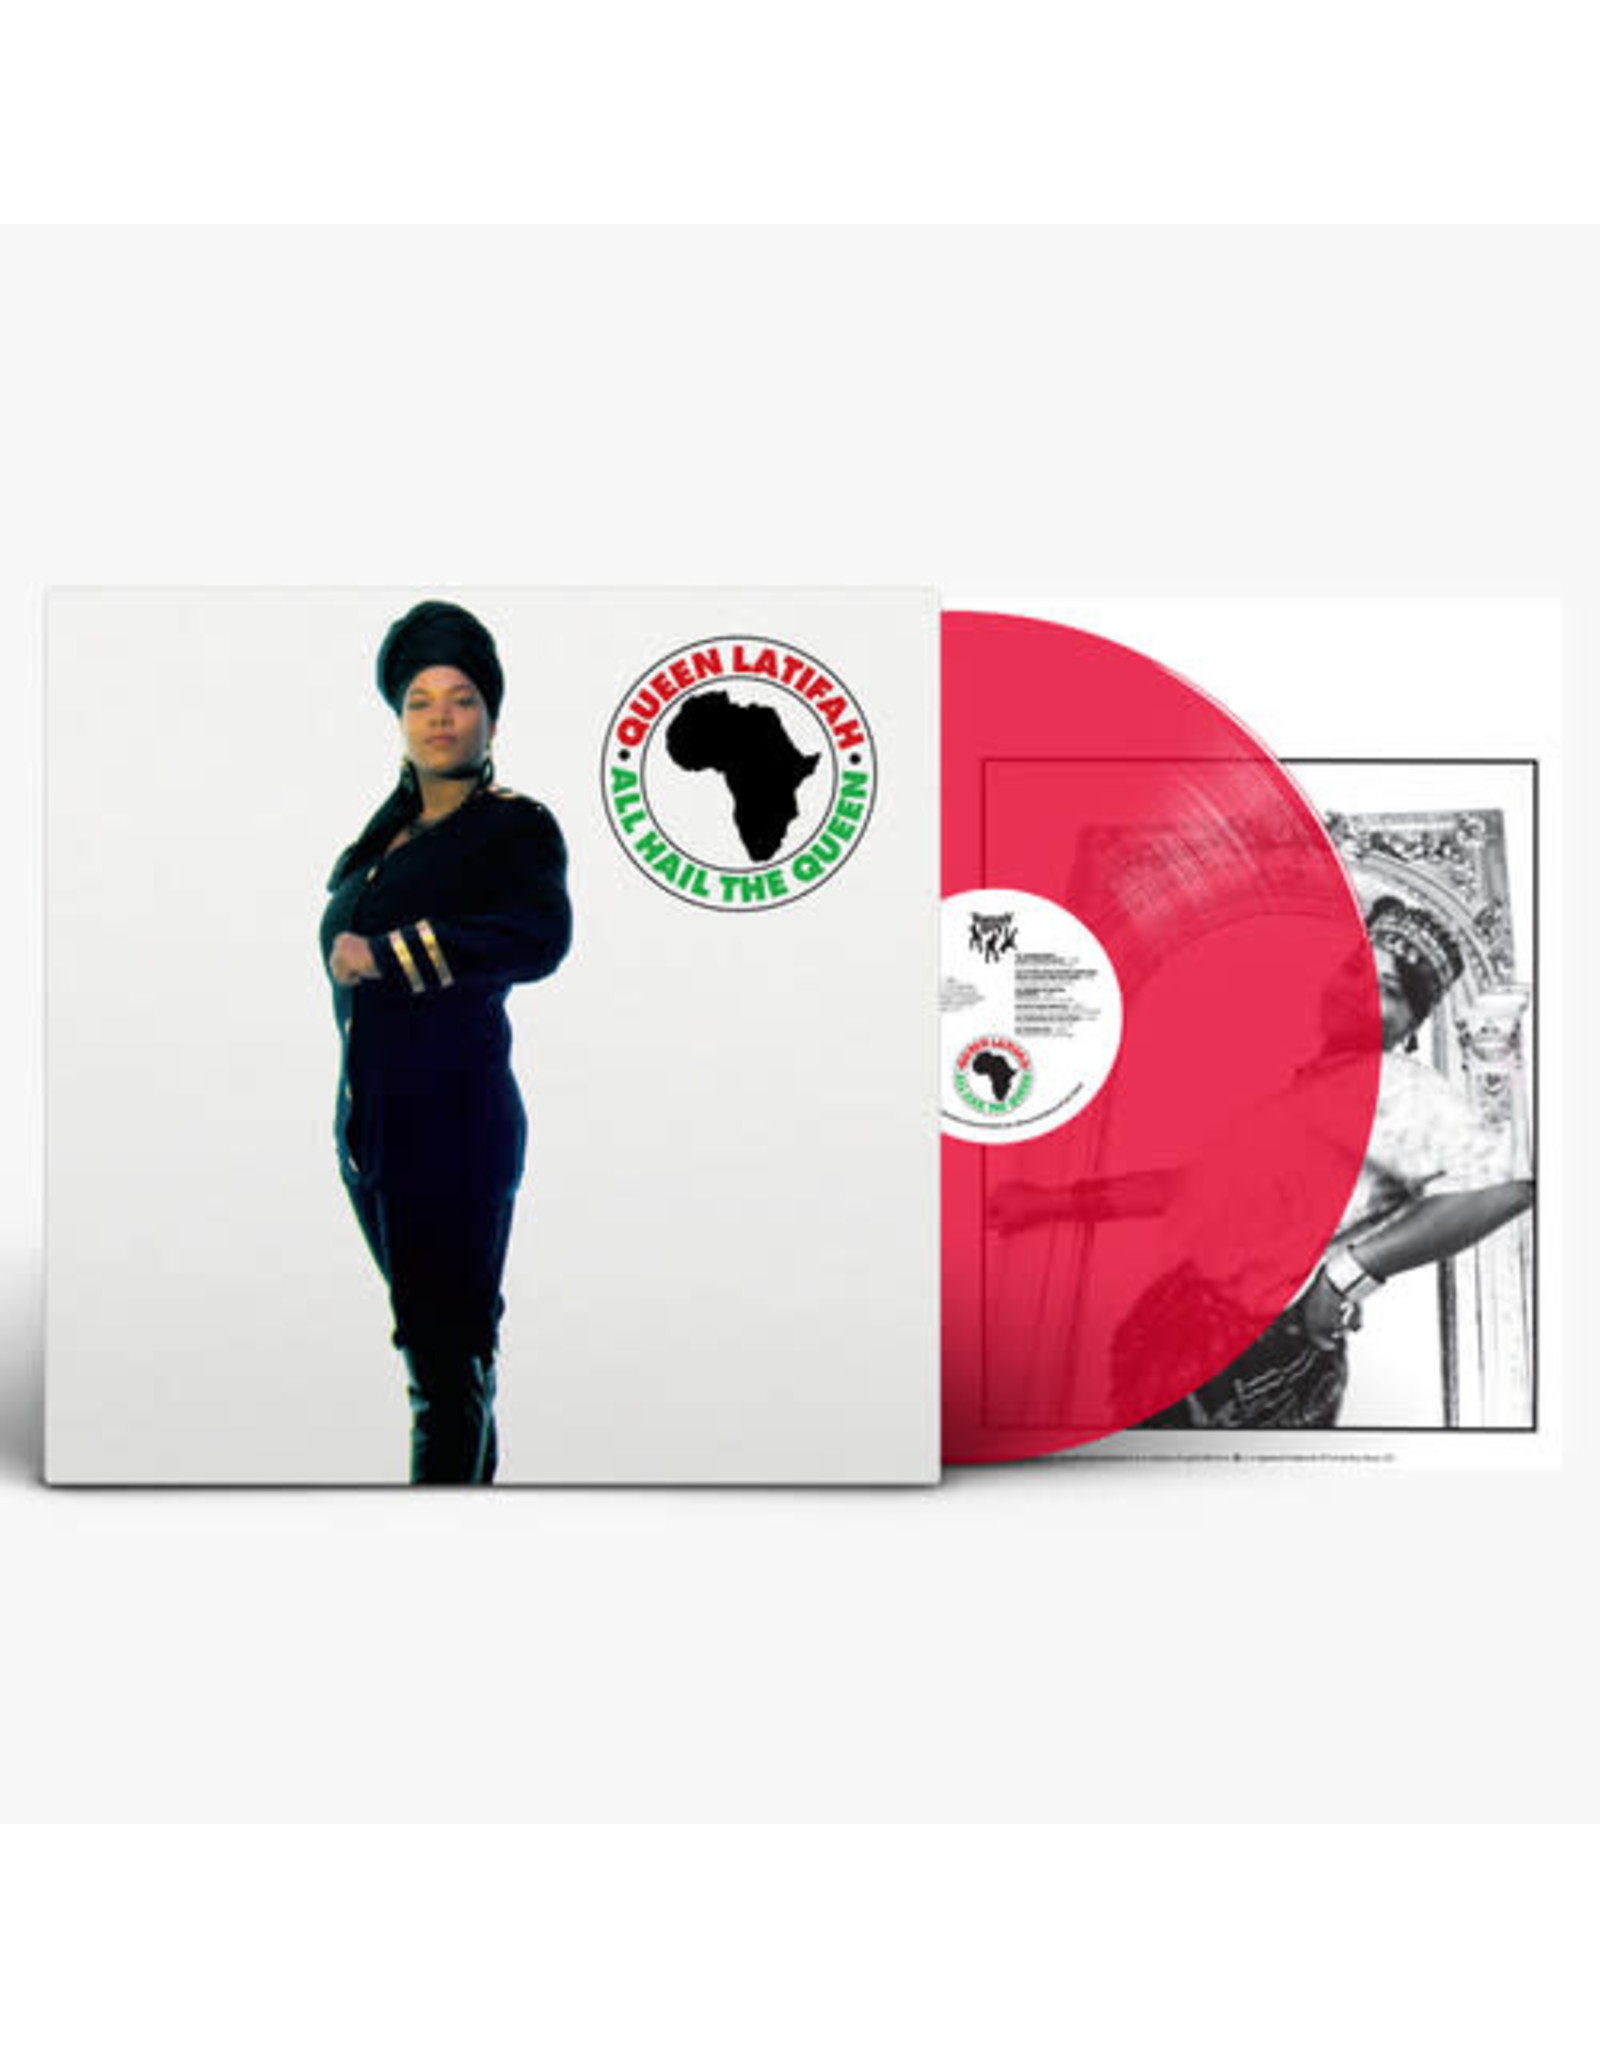 New Vinyl Queen Latifah - All Hail The Queen (Colored) LP